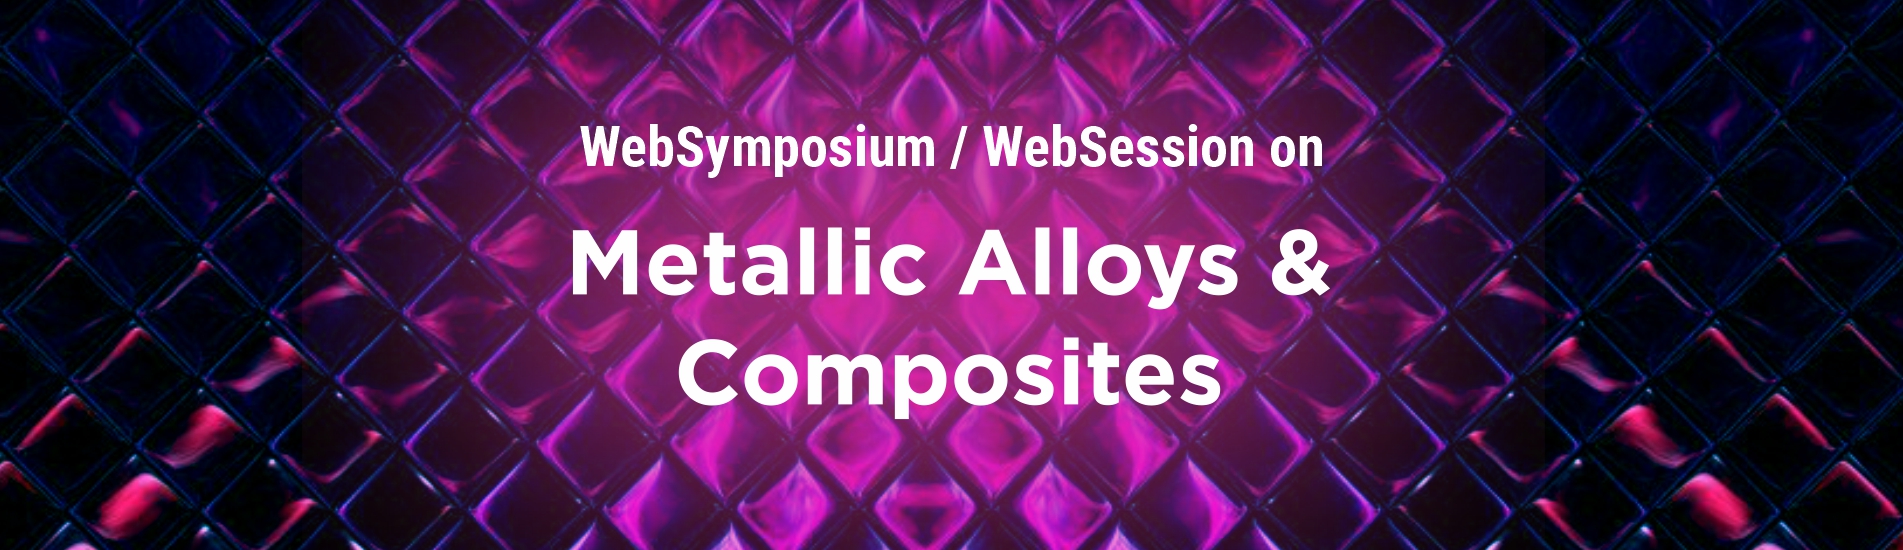 metallic-alloys-and-composites